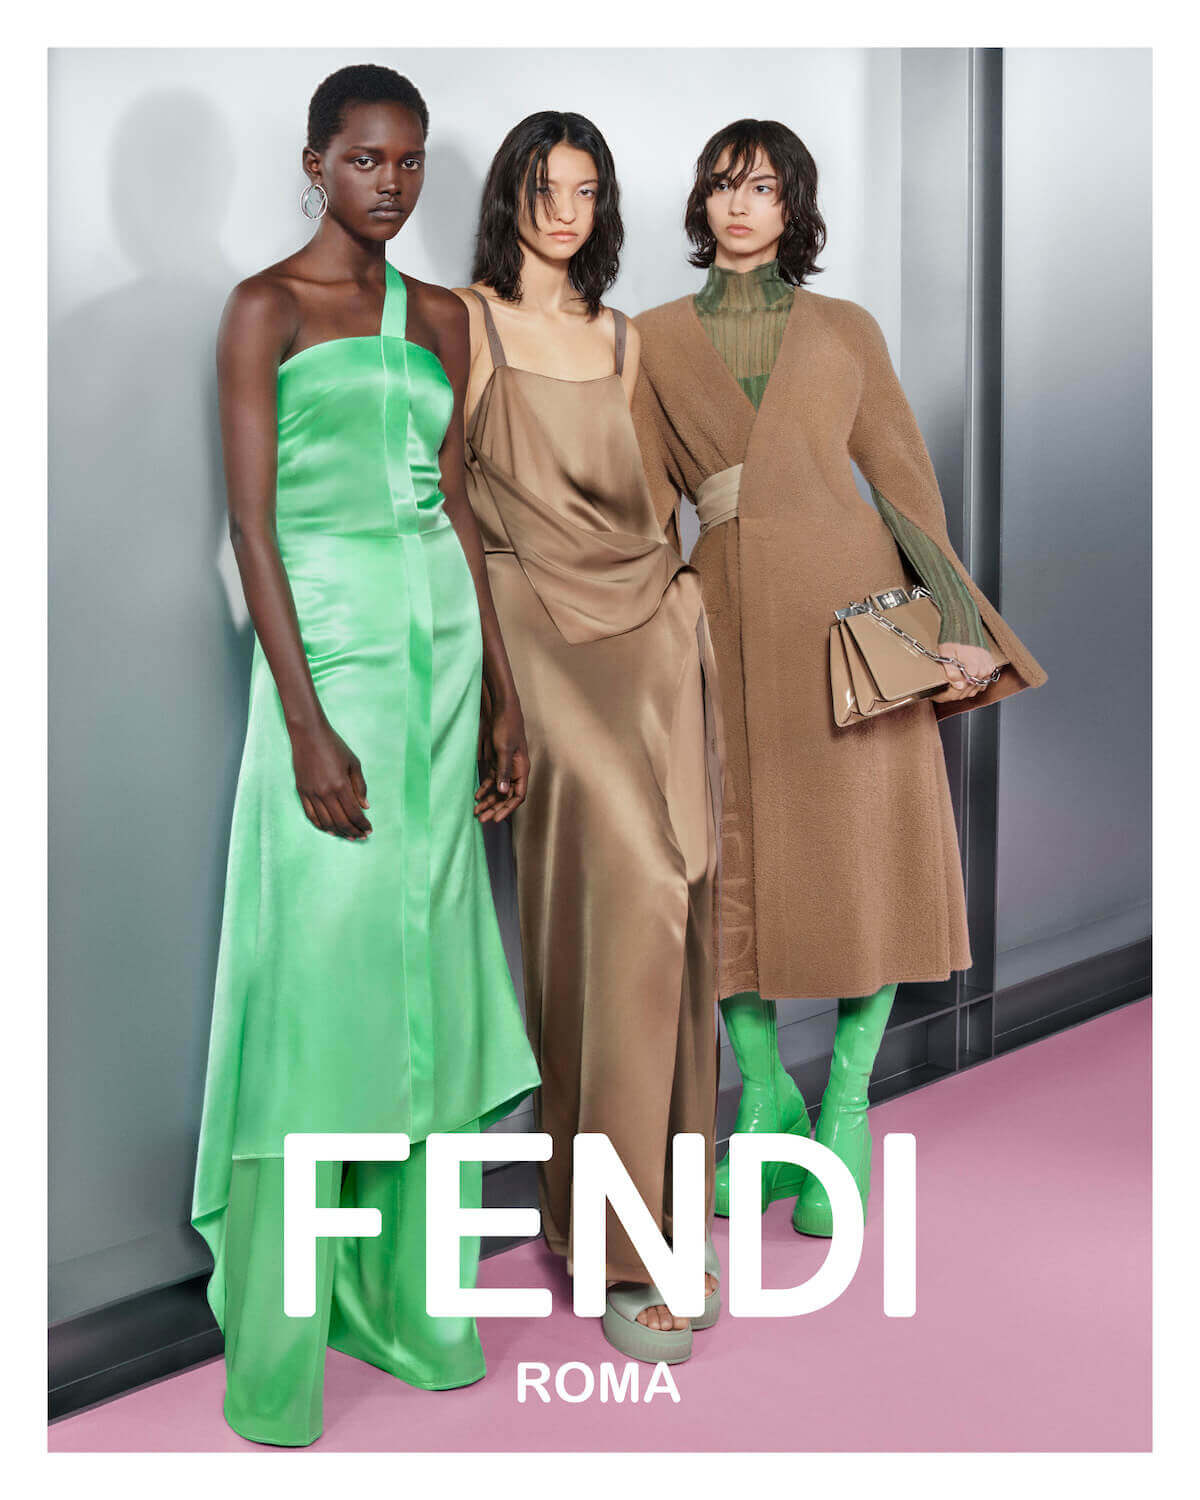 Fendi opens new Tokyo flagship